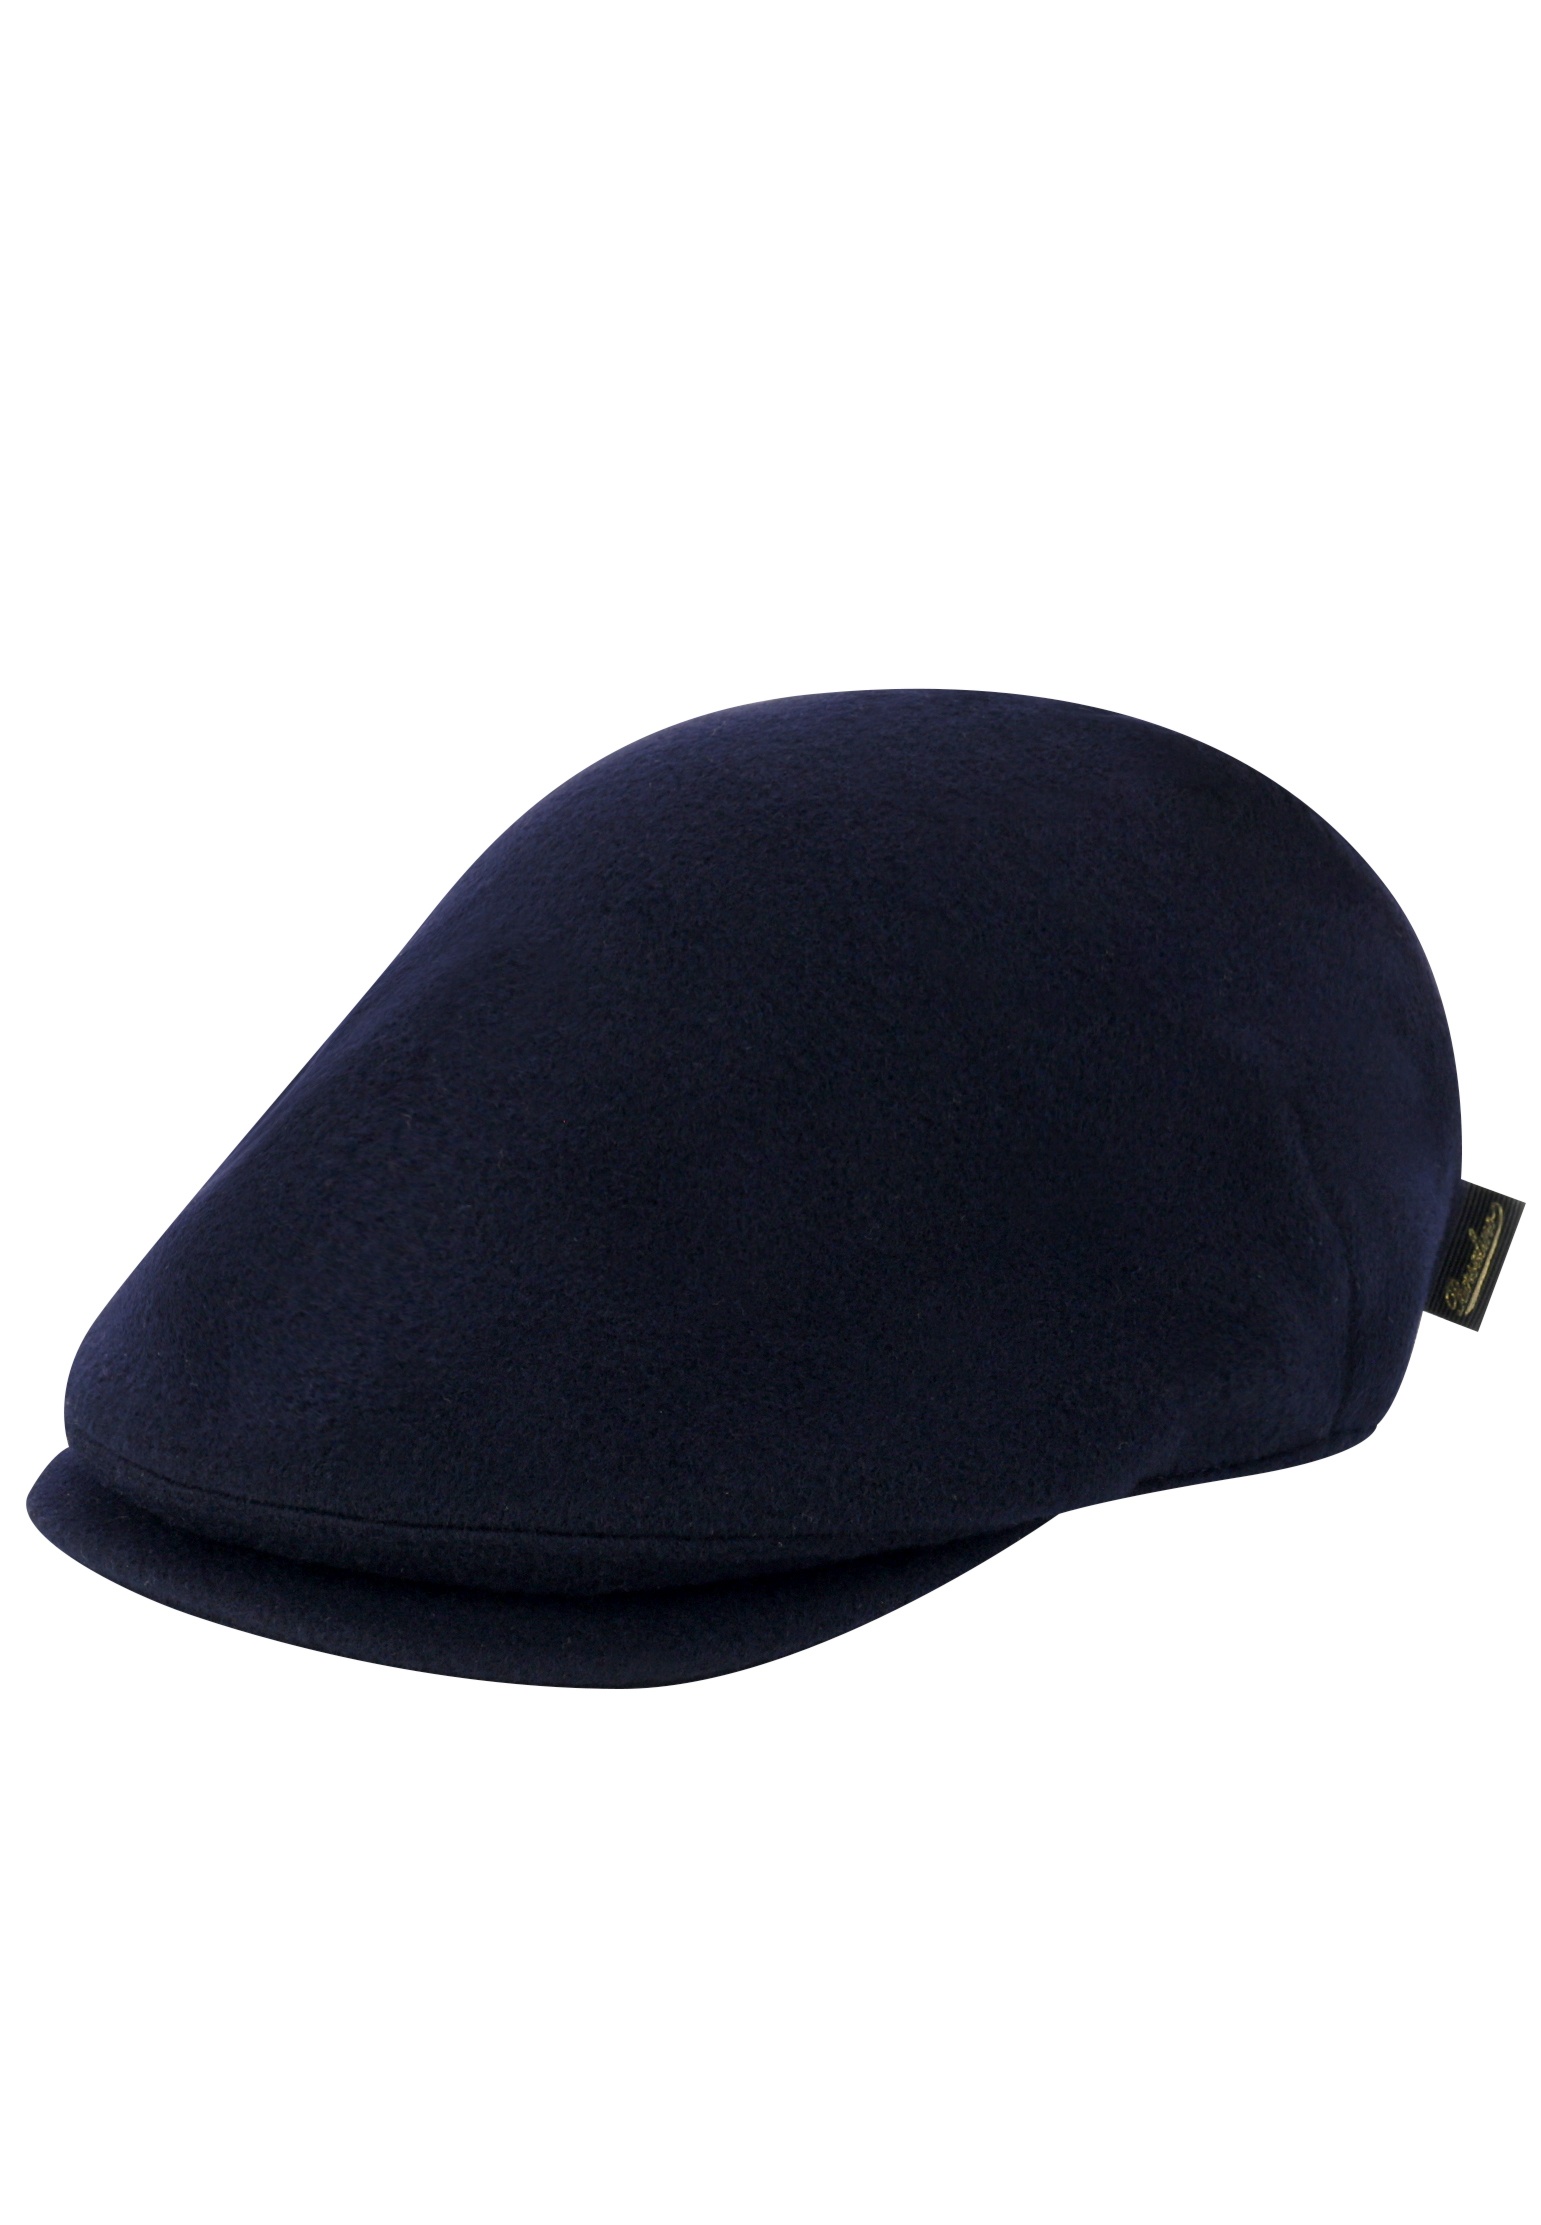 мужская кепка borsalino, синяя